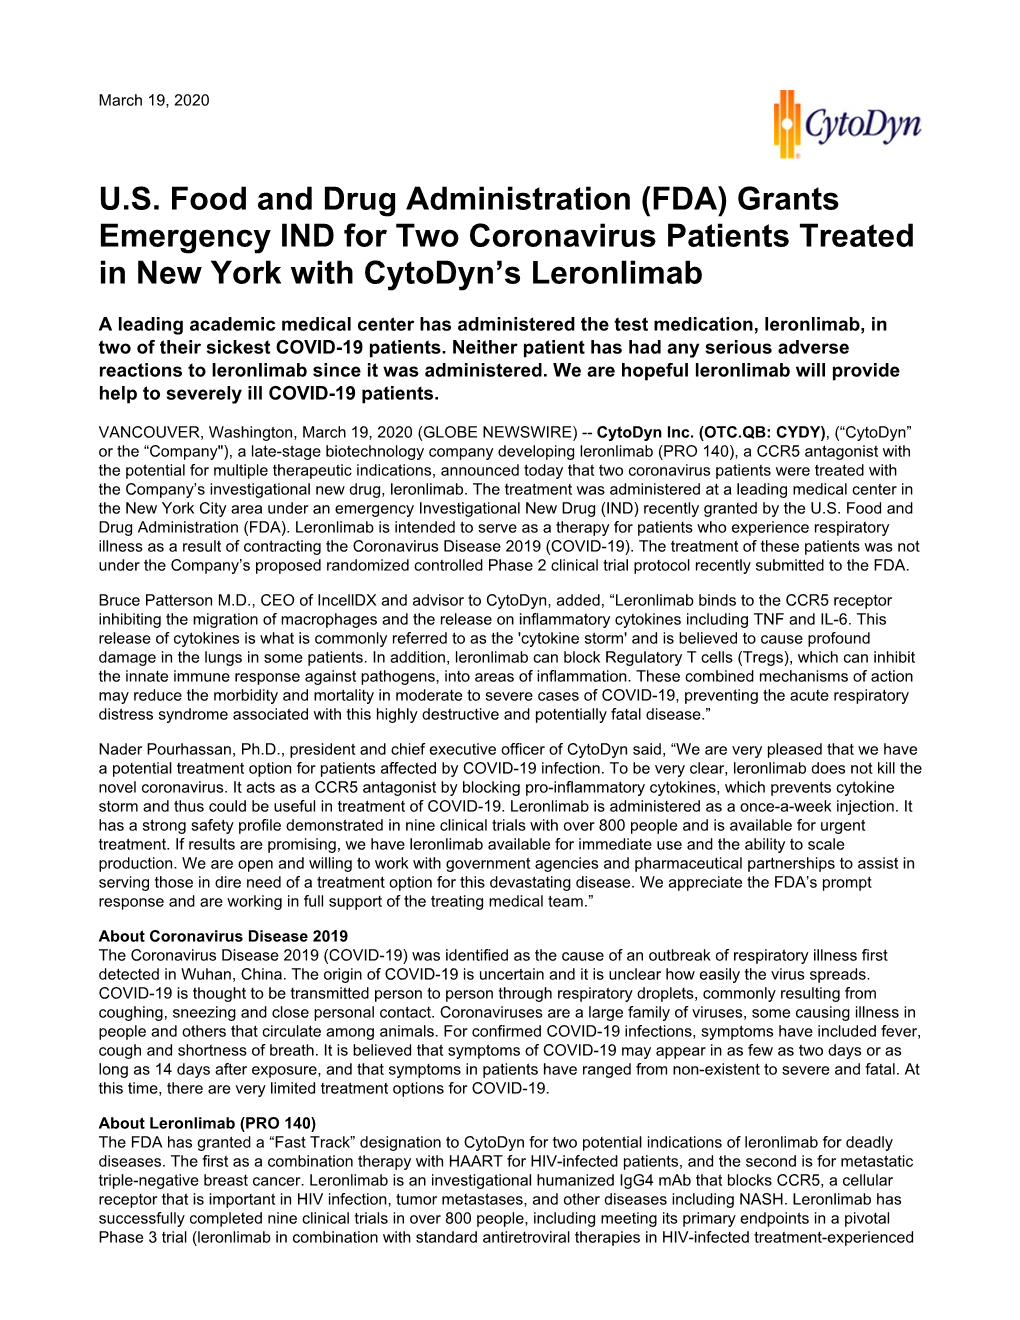 US Food and Drug Administration (FDA)